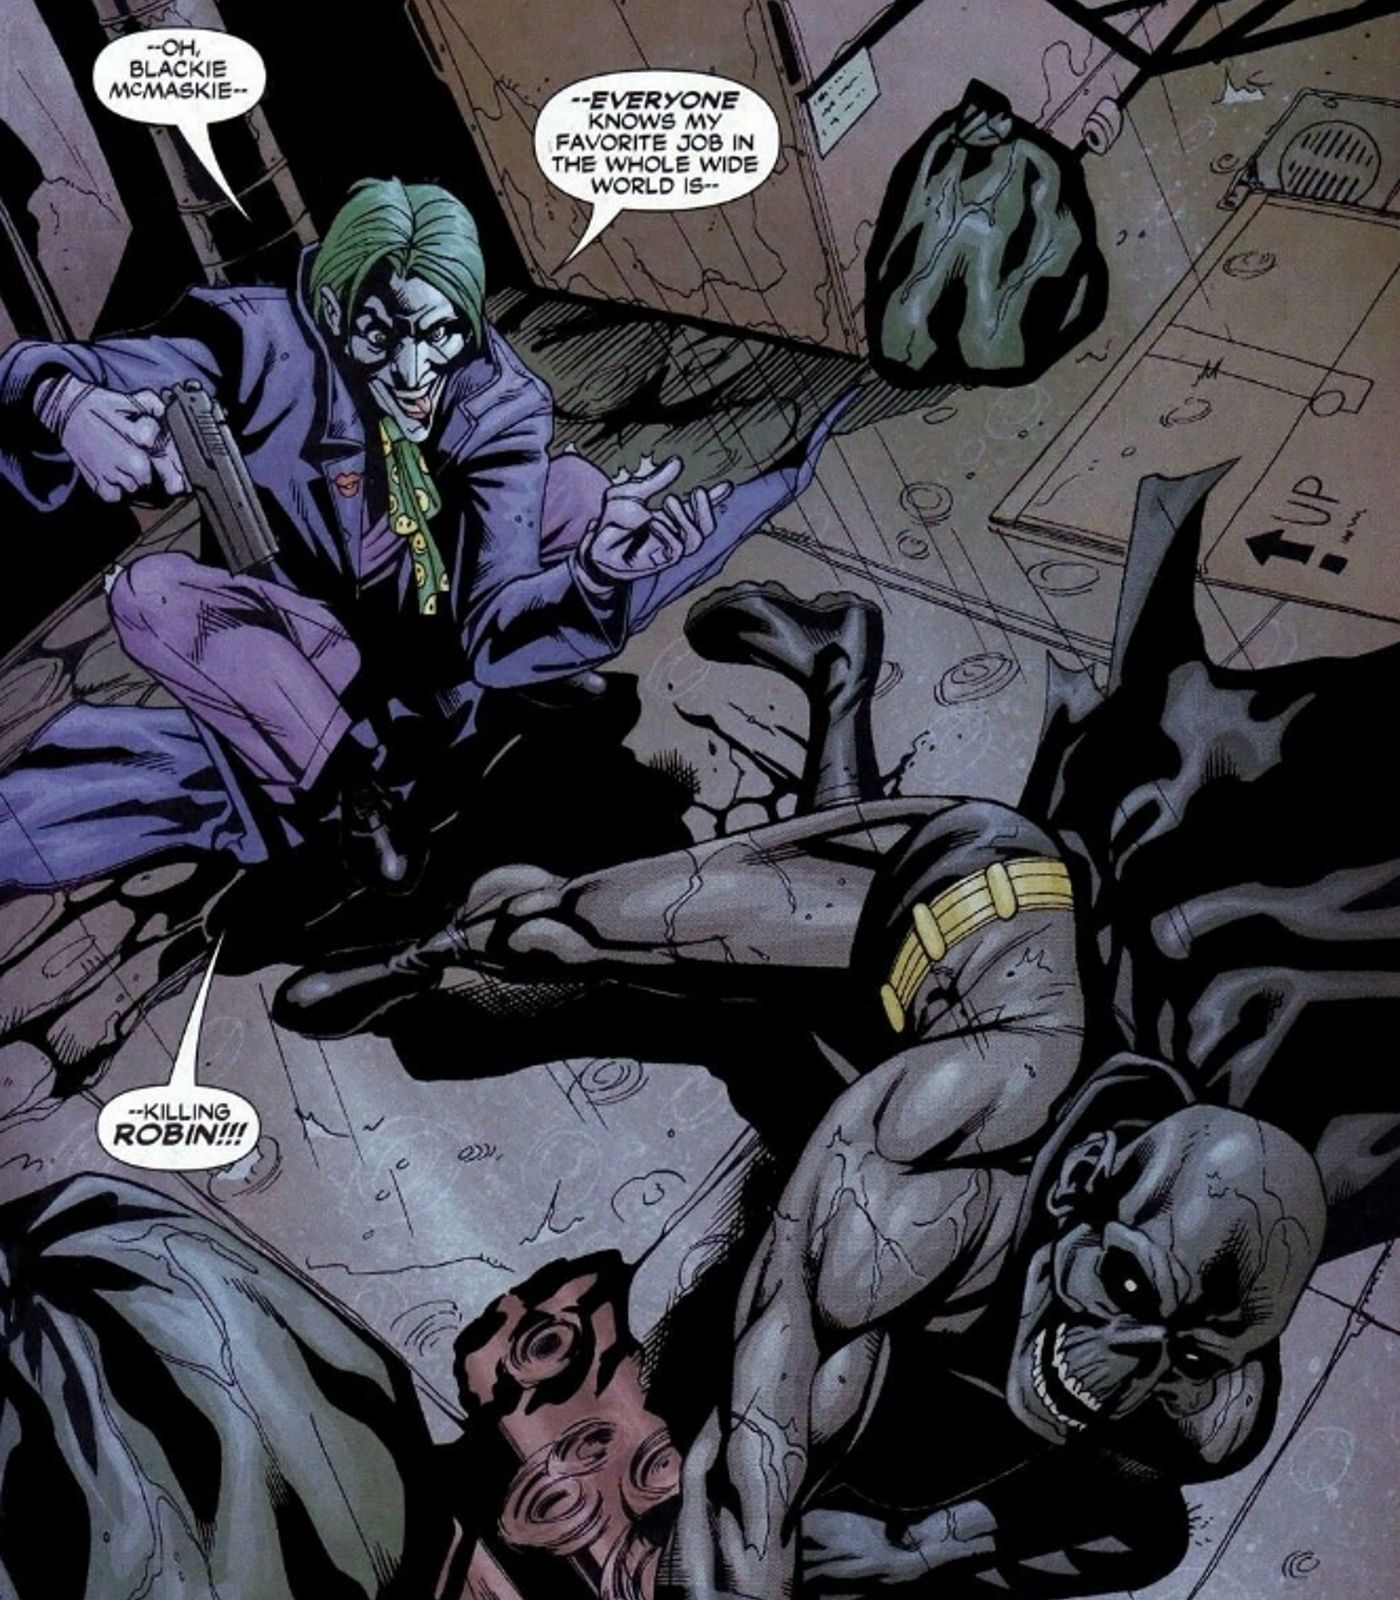 Joker berates a distressed Black Mask over killing Robin.